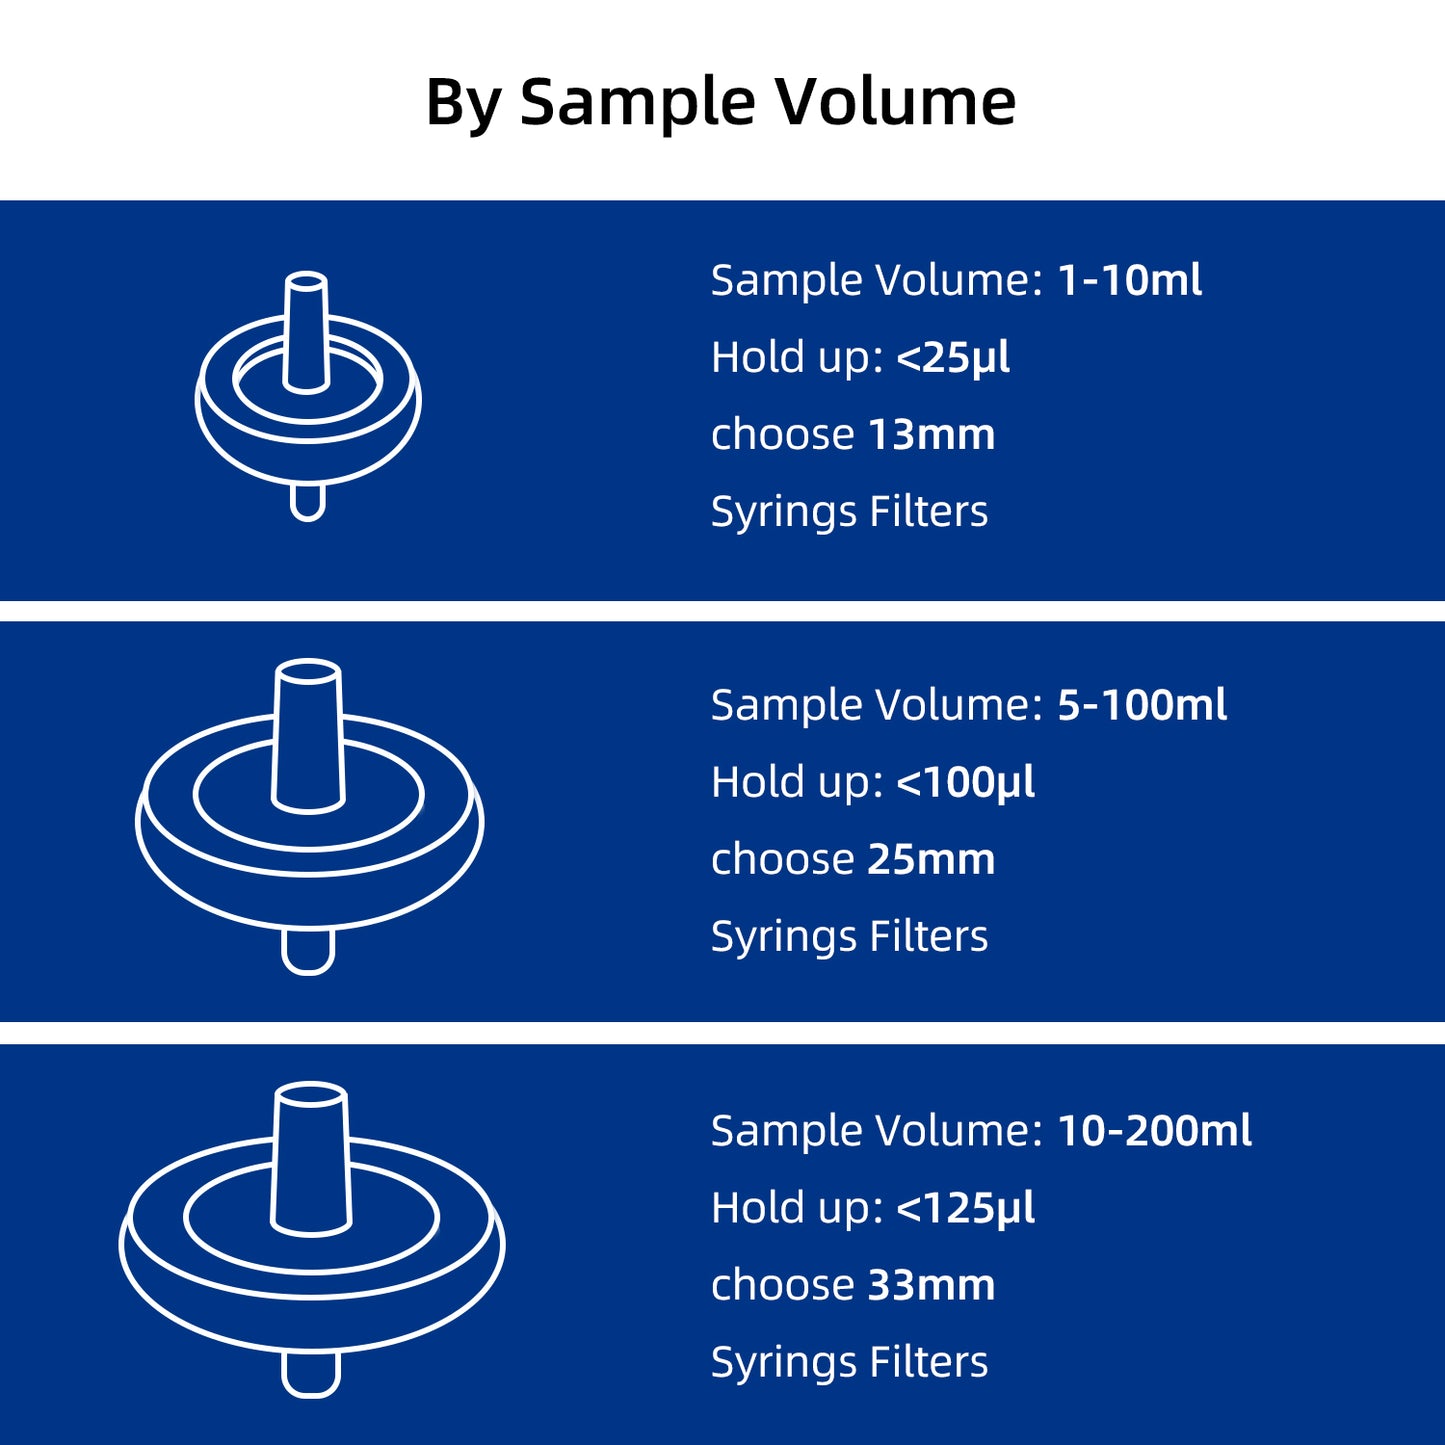 COBETTER Blue Hydrophilic PVDF Syringe Filters Non-sterile 100pcs/pk